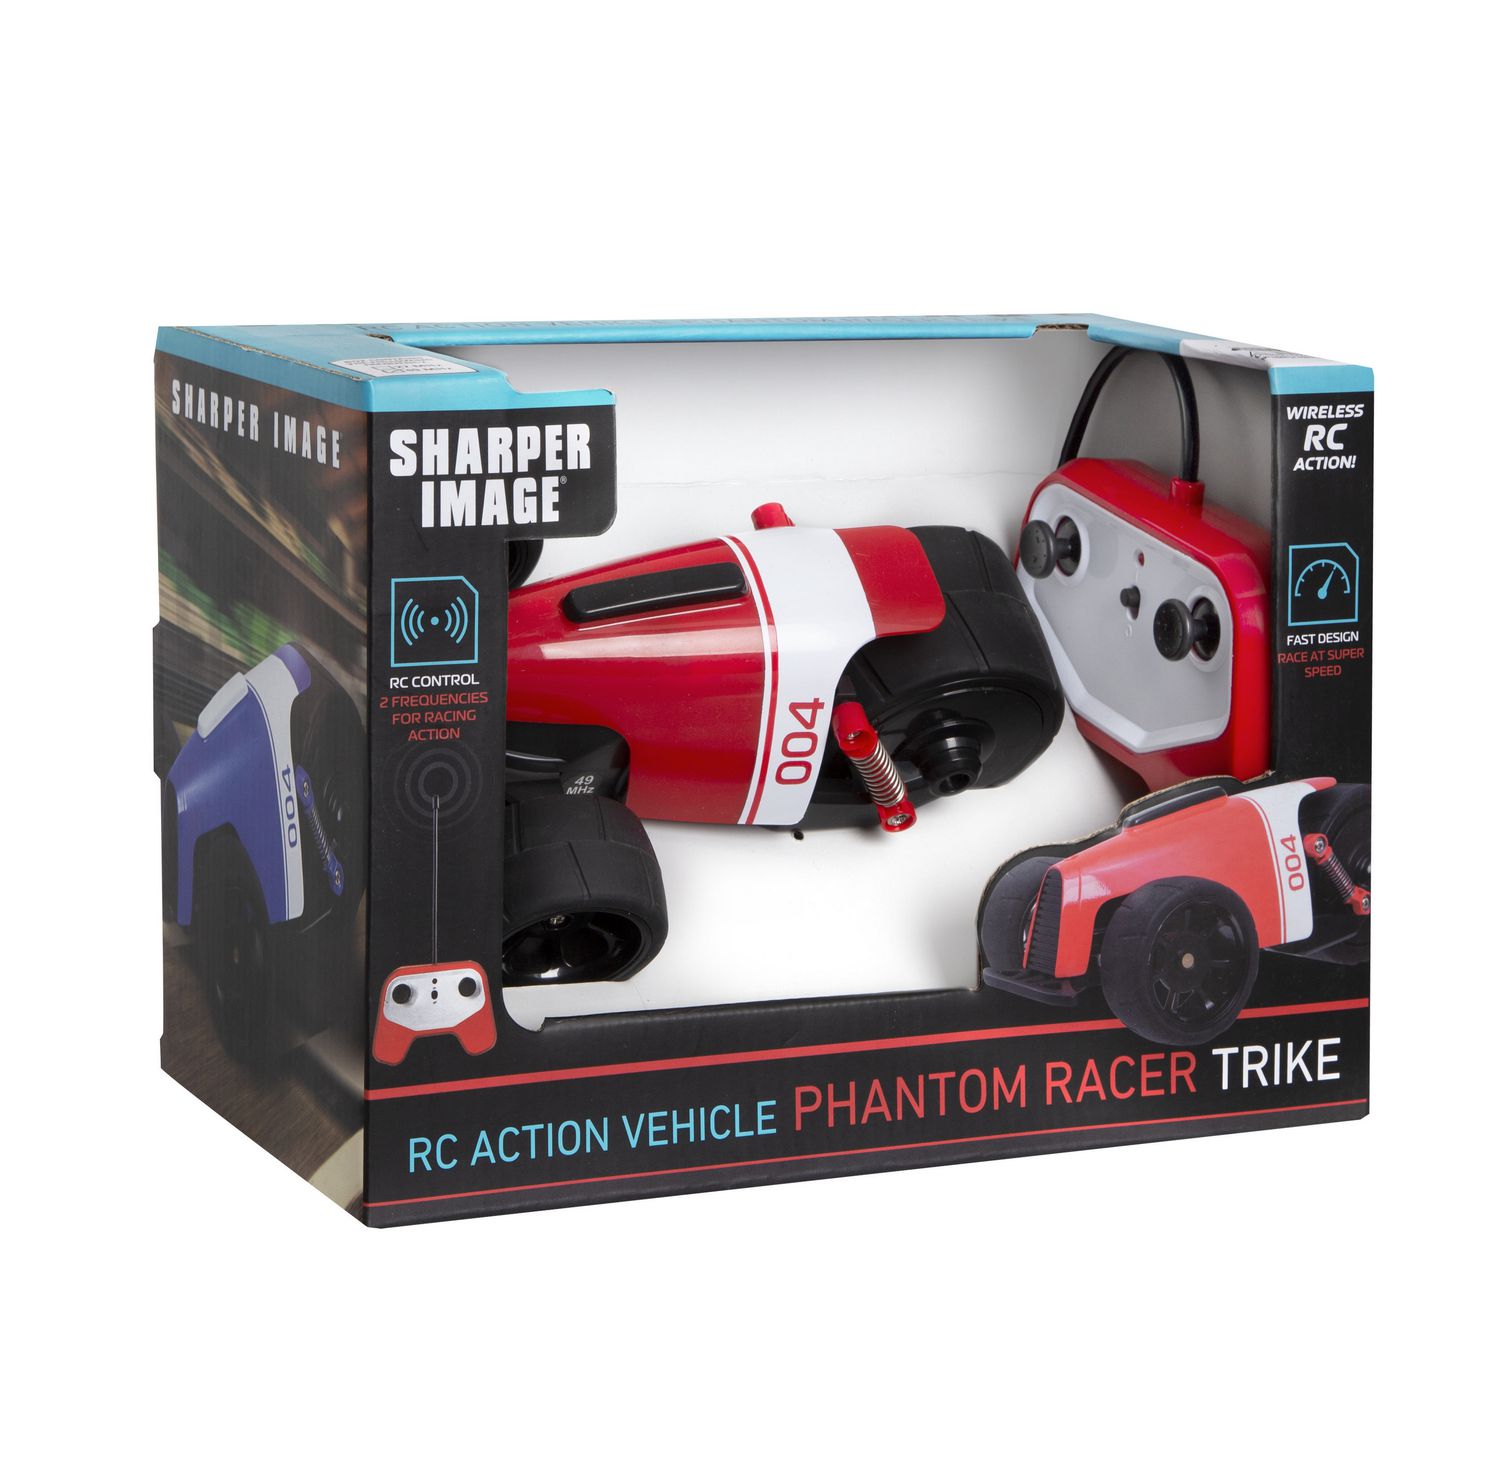 sharper image remote control phantom racer trike